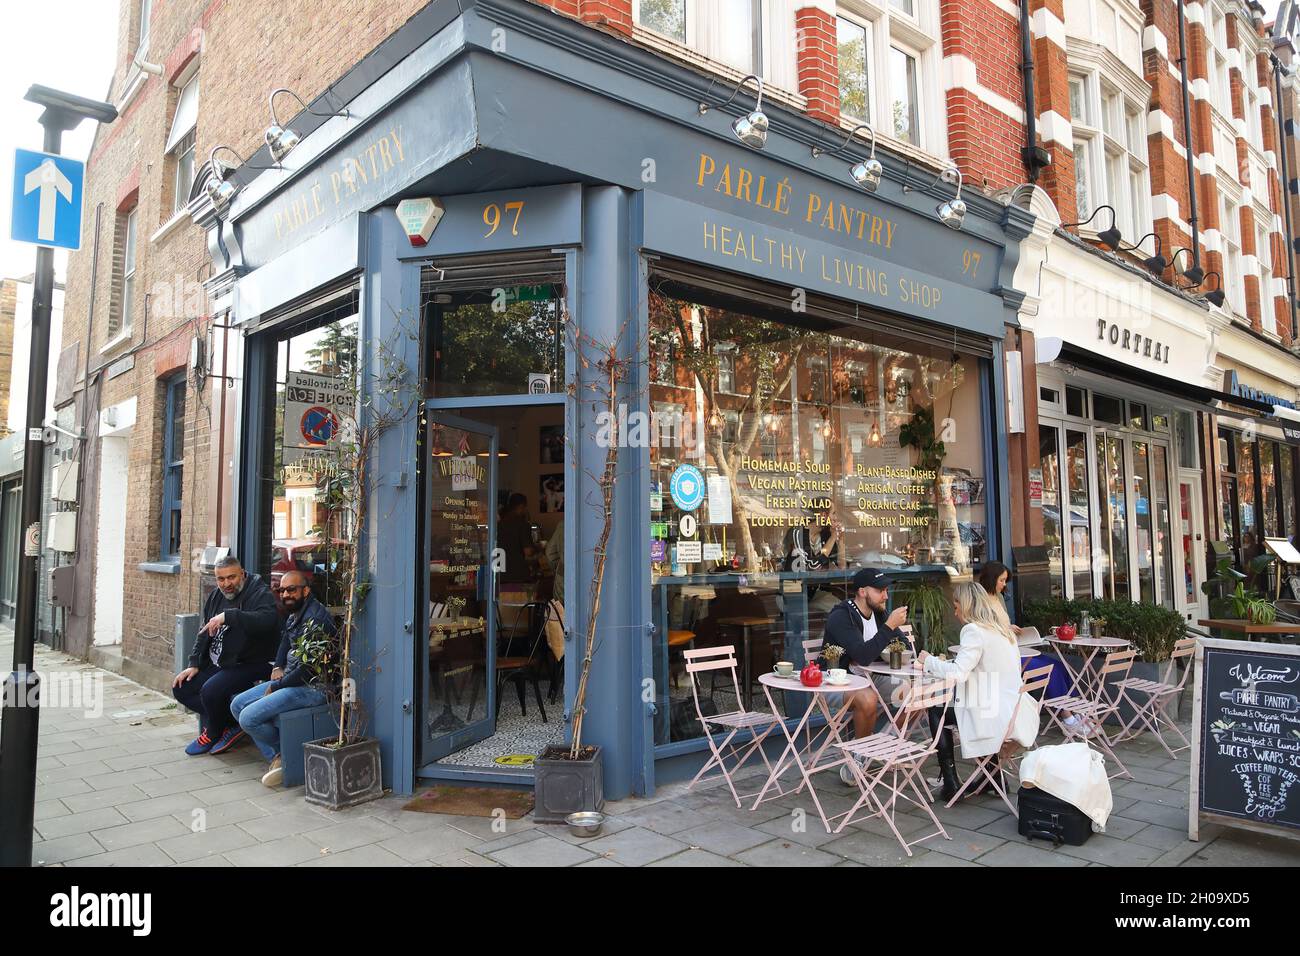 The Parle Pantry vegan Healthy living Shop an der Chiswick High Road, London, Großbritannien Stockfoto